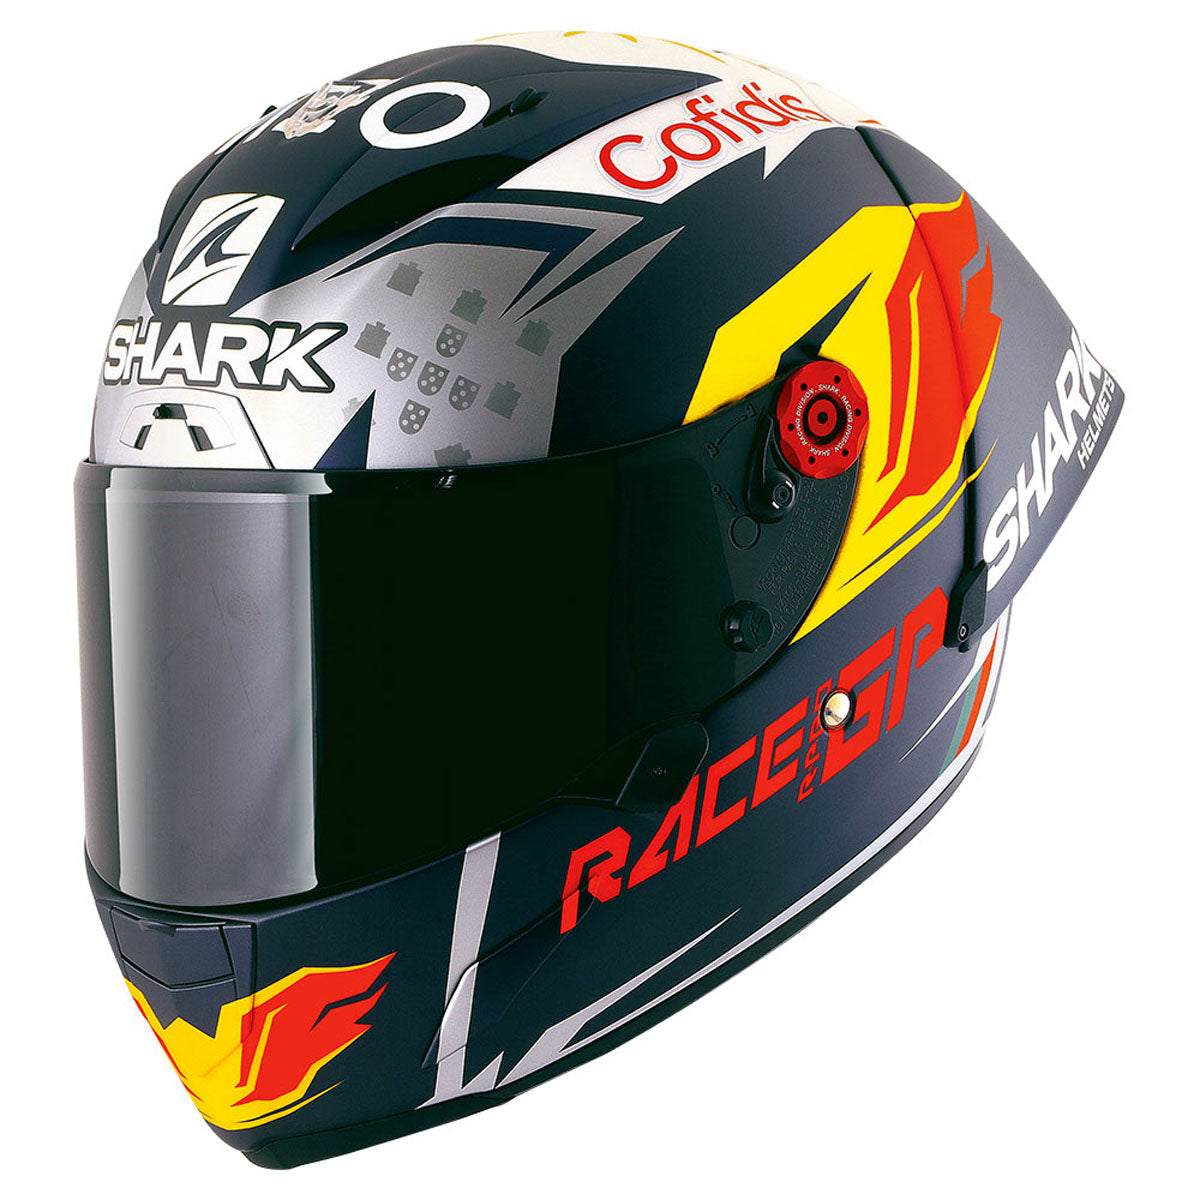 Shark Race-R Pro D Oliveira Signature Helmet - ExtremeSupply.com